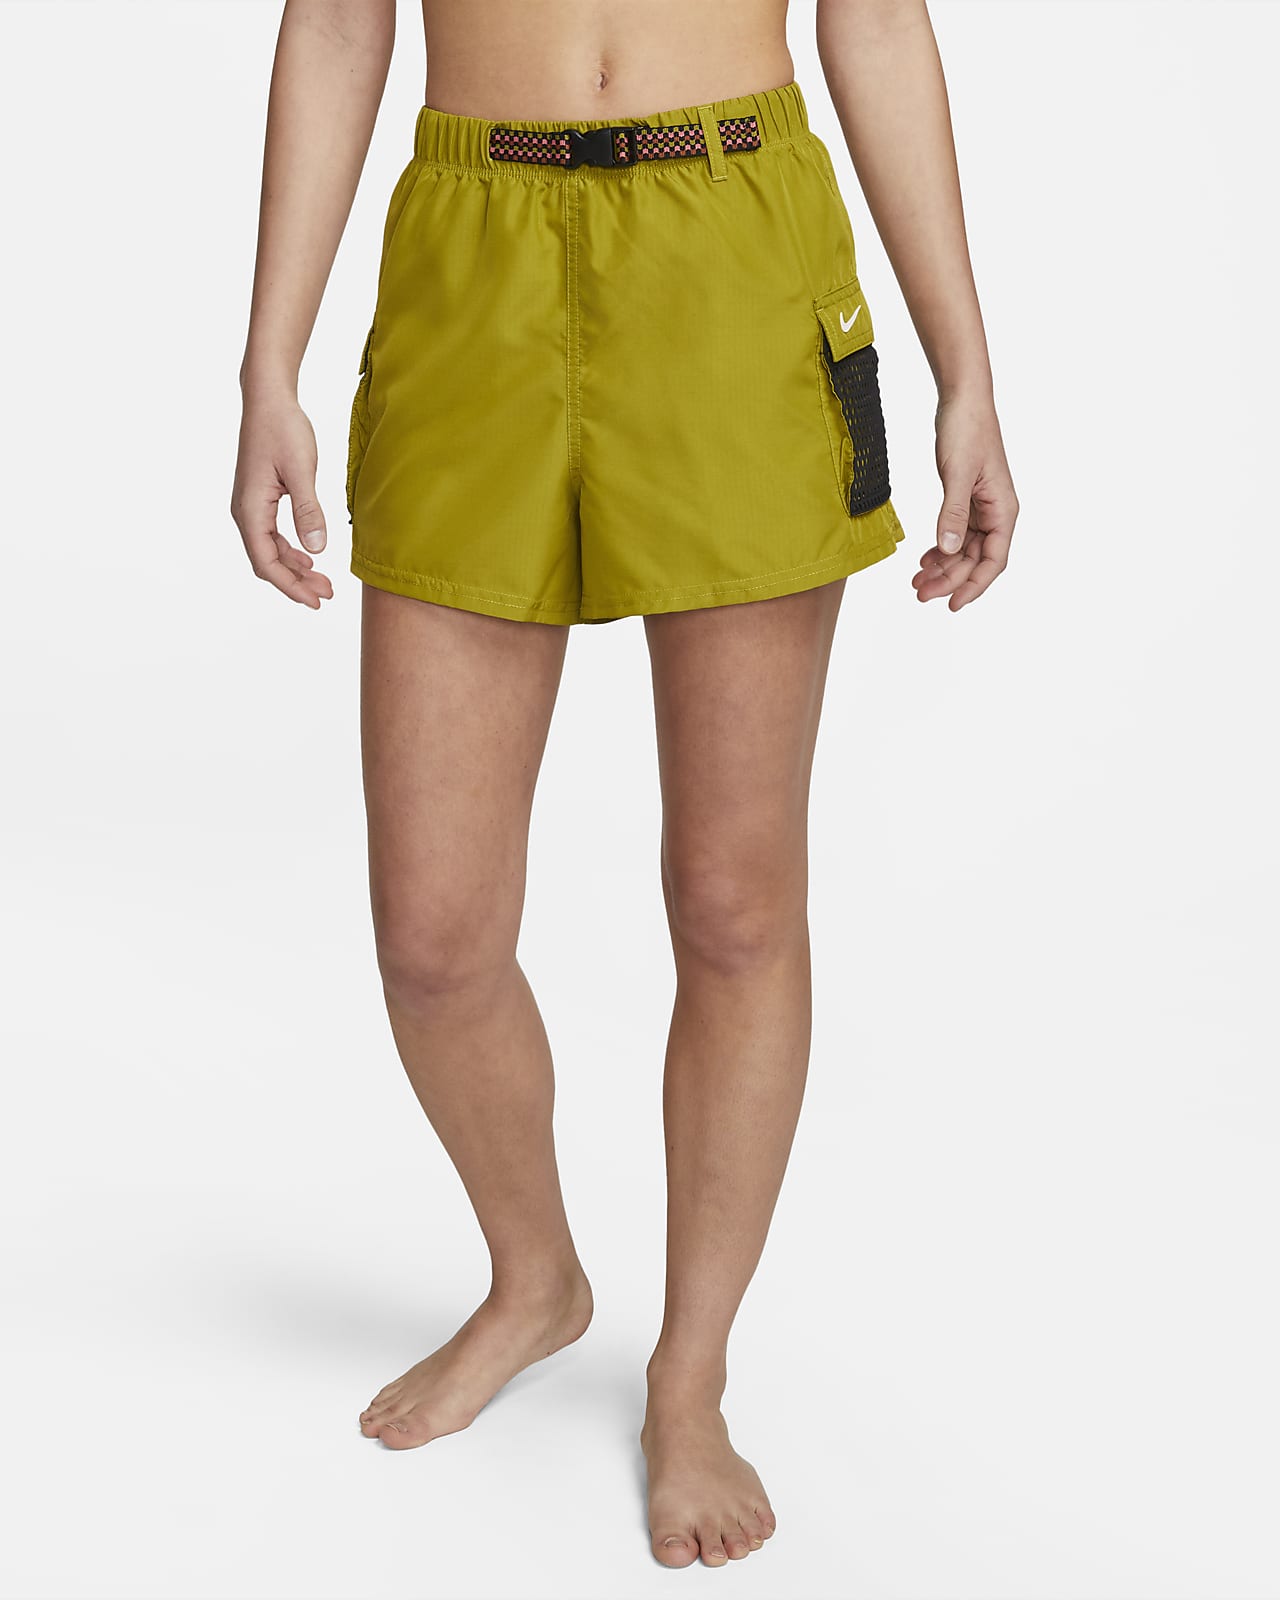 Nike Women's Cargo Cover-Up Swim Shorts